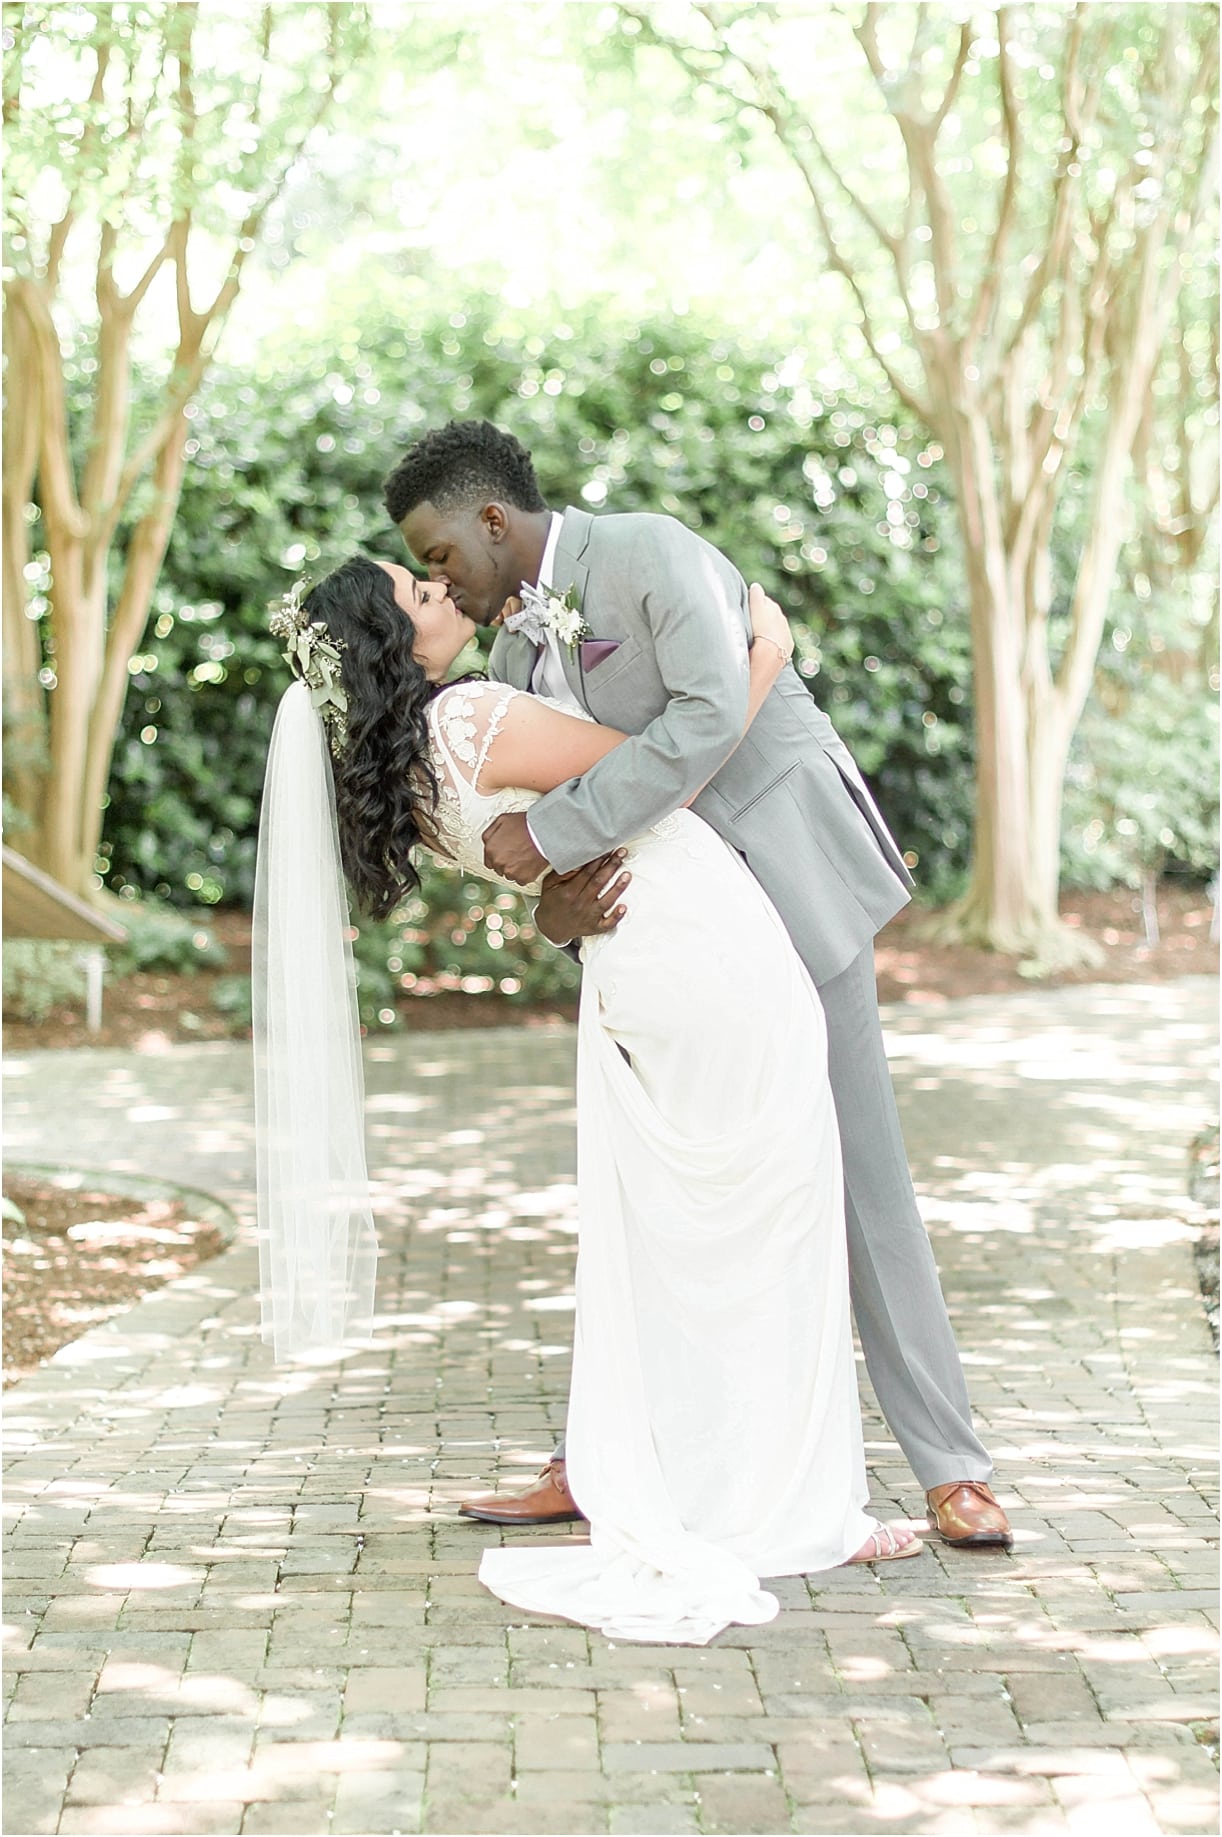 Interracial Lavender Richmond Virginia Wedding as seen on Hill City Bride Blog by Demi Mabry Photography kiss groom